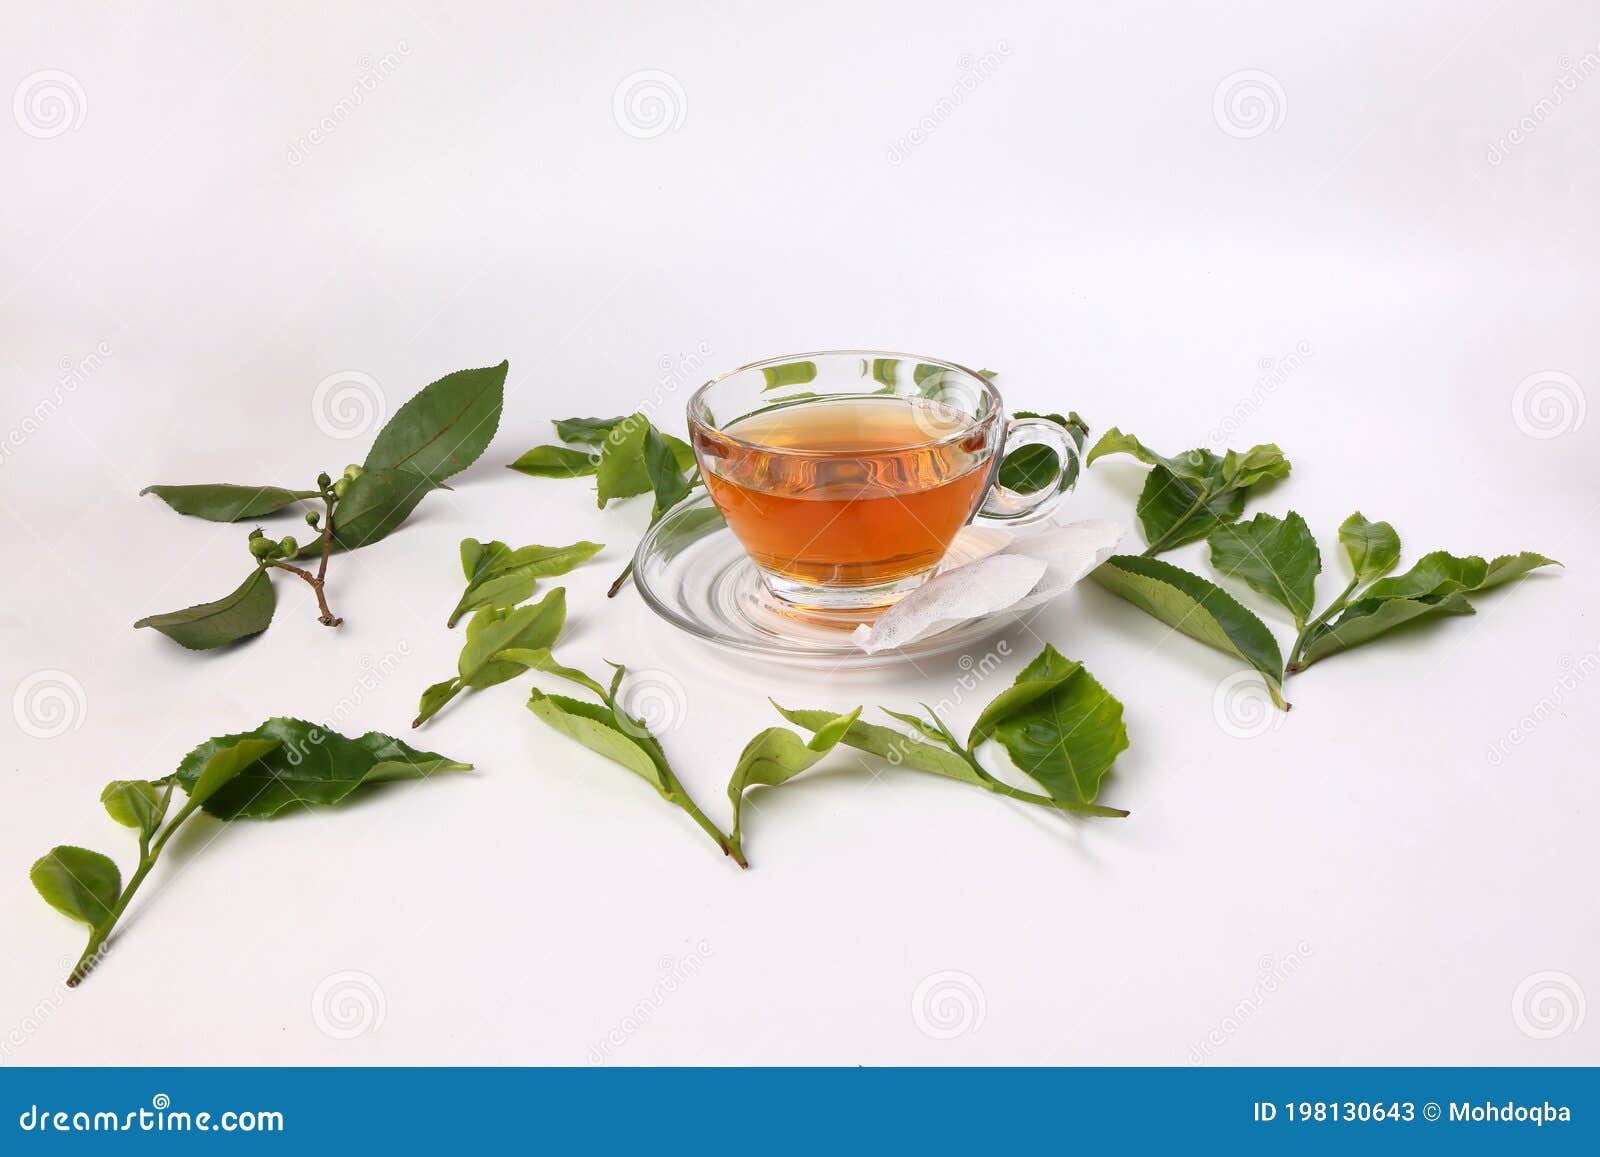 Raw Green Tea Leaf Flower Bud on White Background Stock Image - Image ...